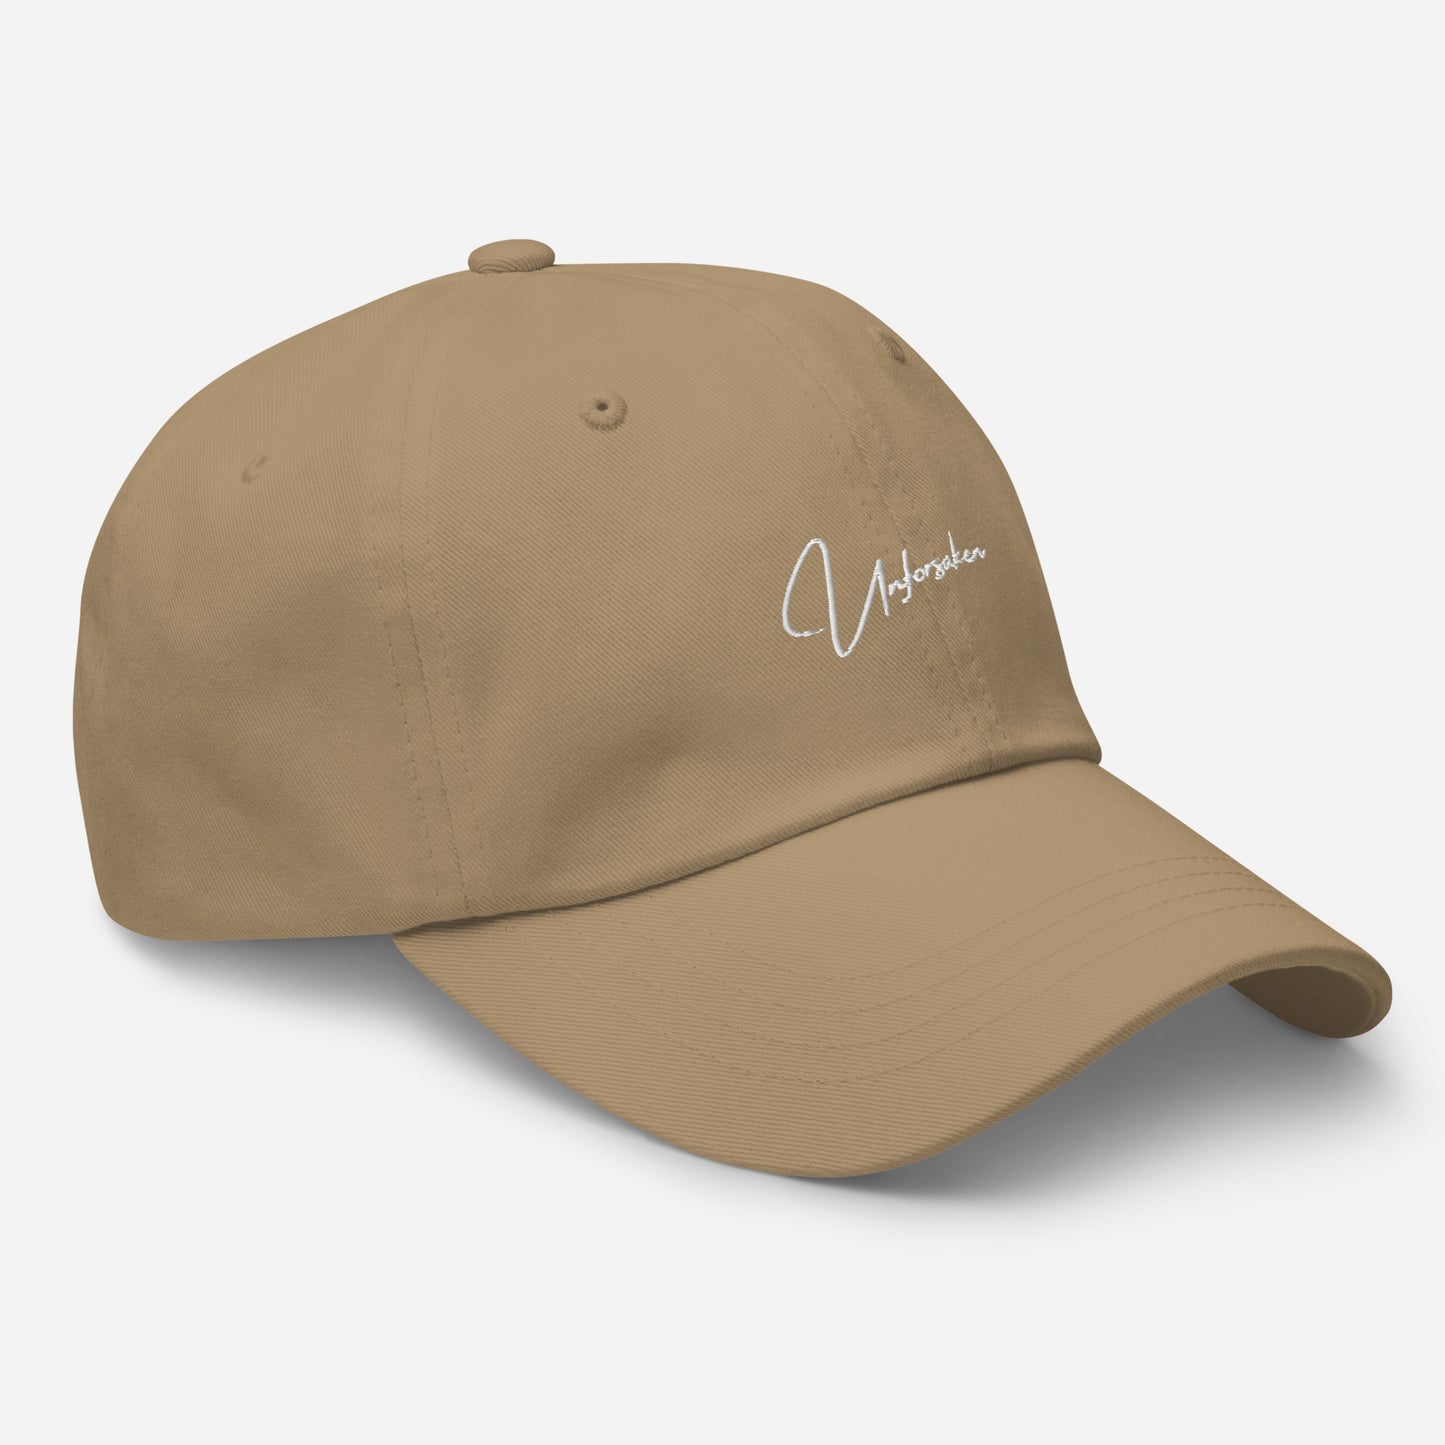 UNFORSAKEN 007 Cursive Embroidered Training Hat